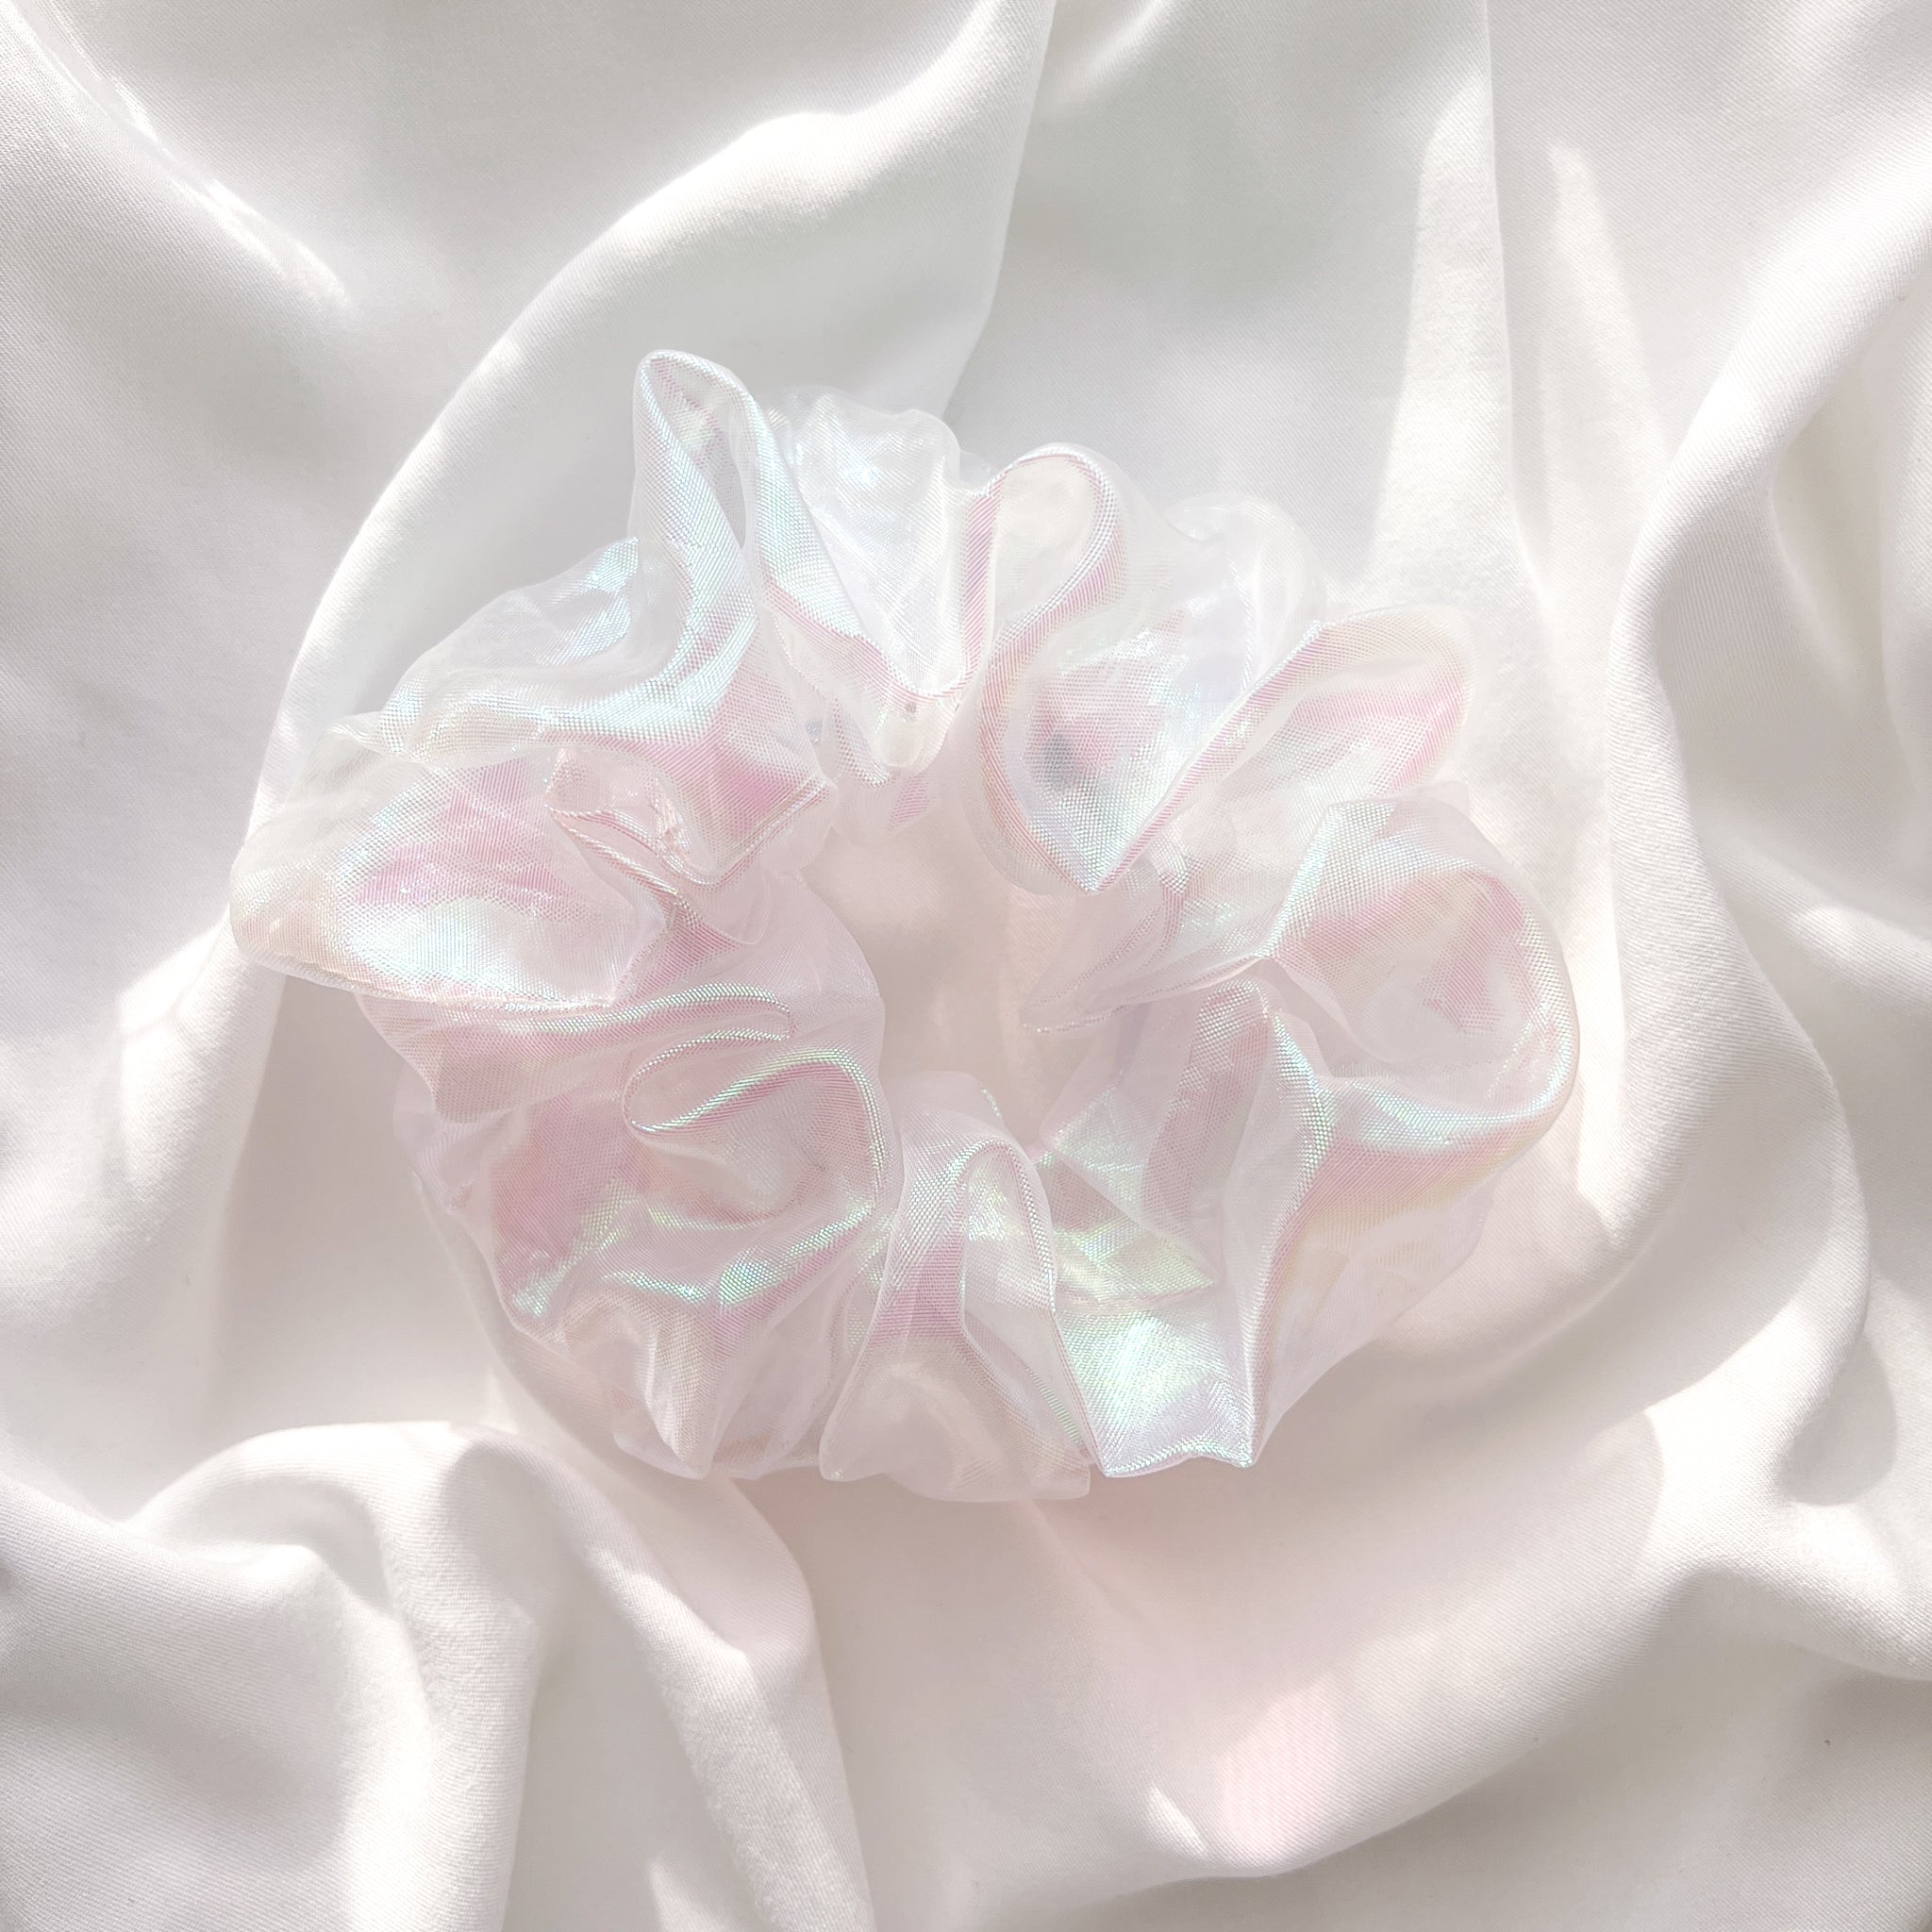 Translucent Jumbo Scrunchie in Unicon White